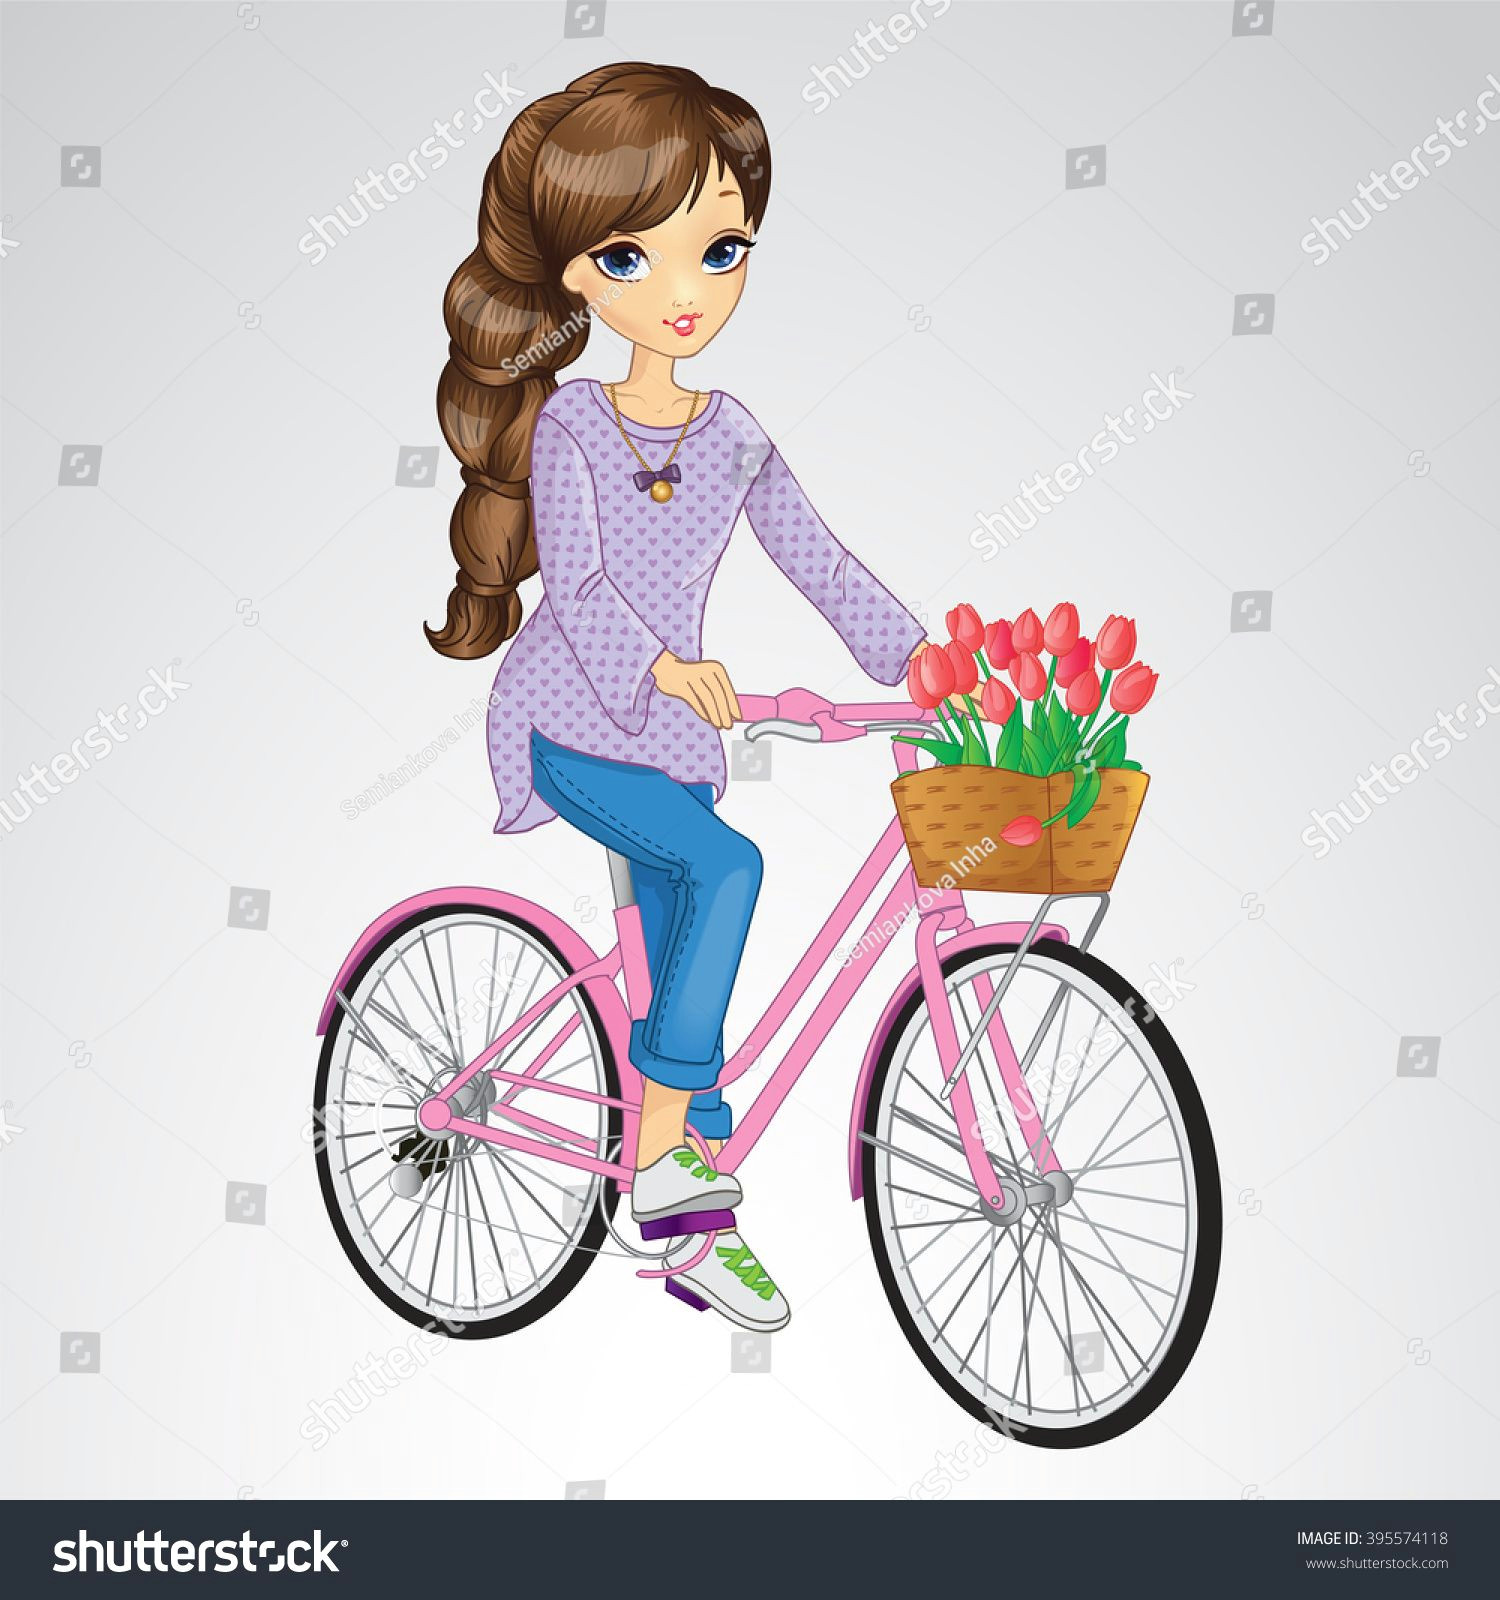 Drawing Of A Girl Riding A Bike Girl Riding On Pink Bicycle Cycle Shahi Swari Pinterest